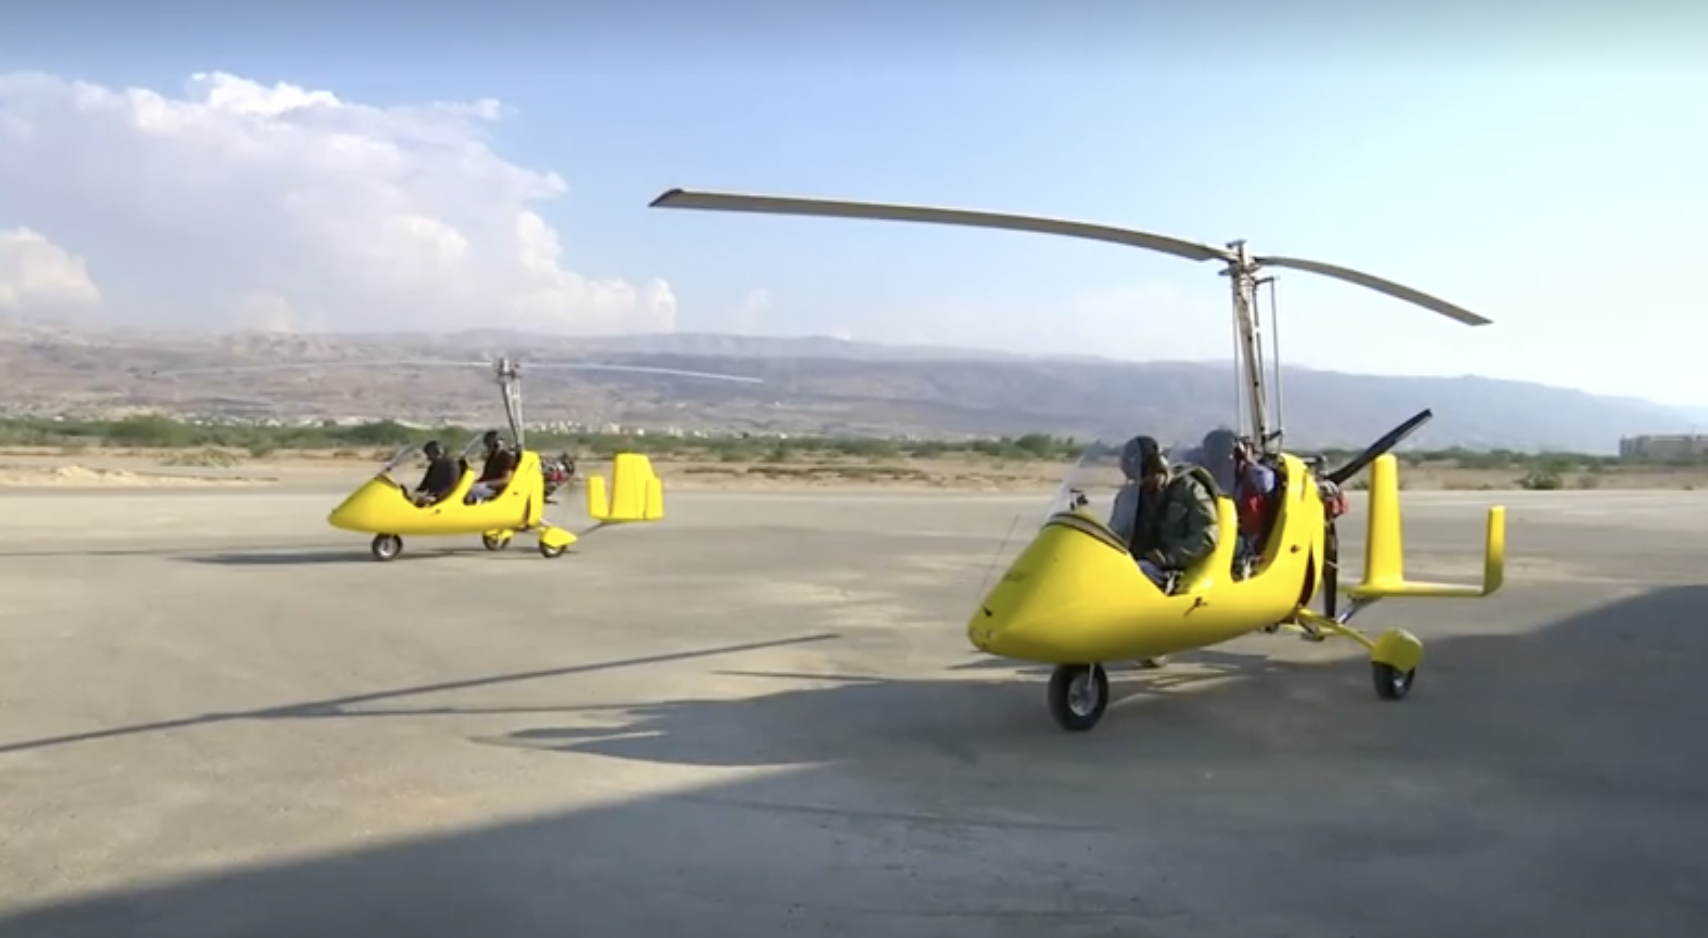 133-012955-jirkopter-allows-tourists-jordan-dead-sea-3